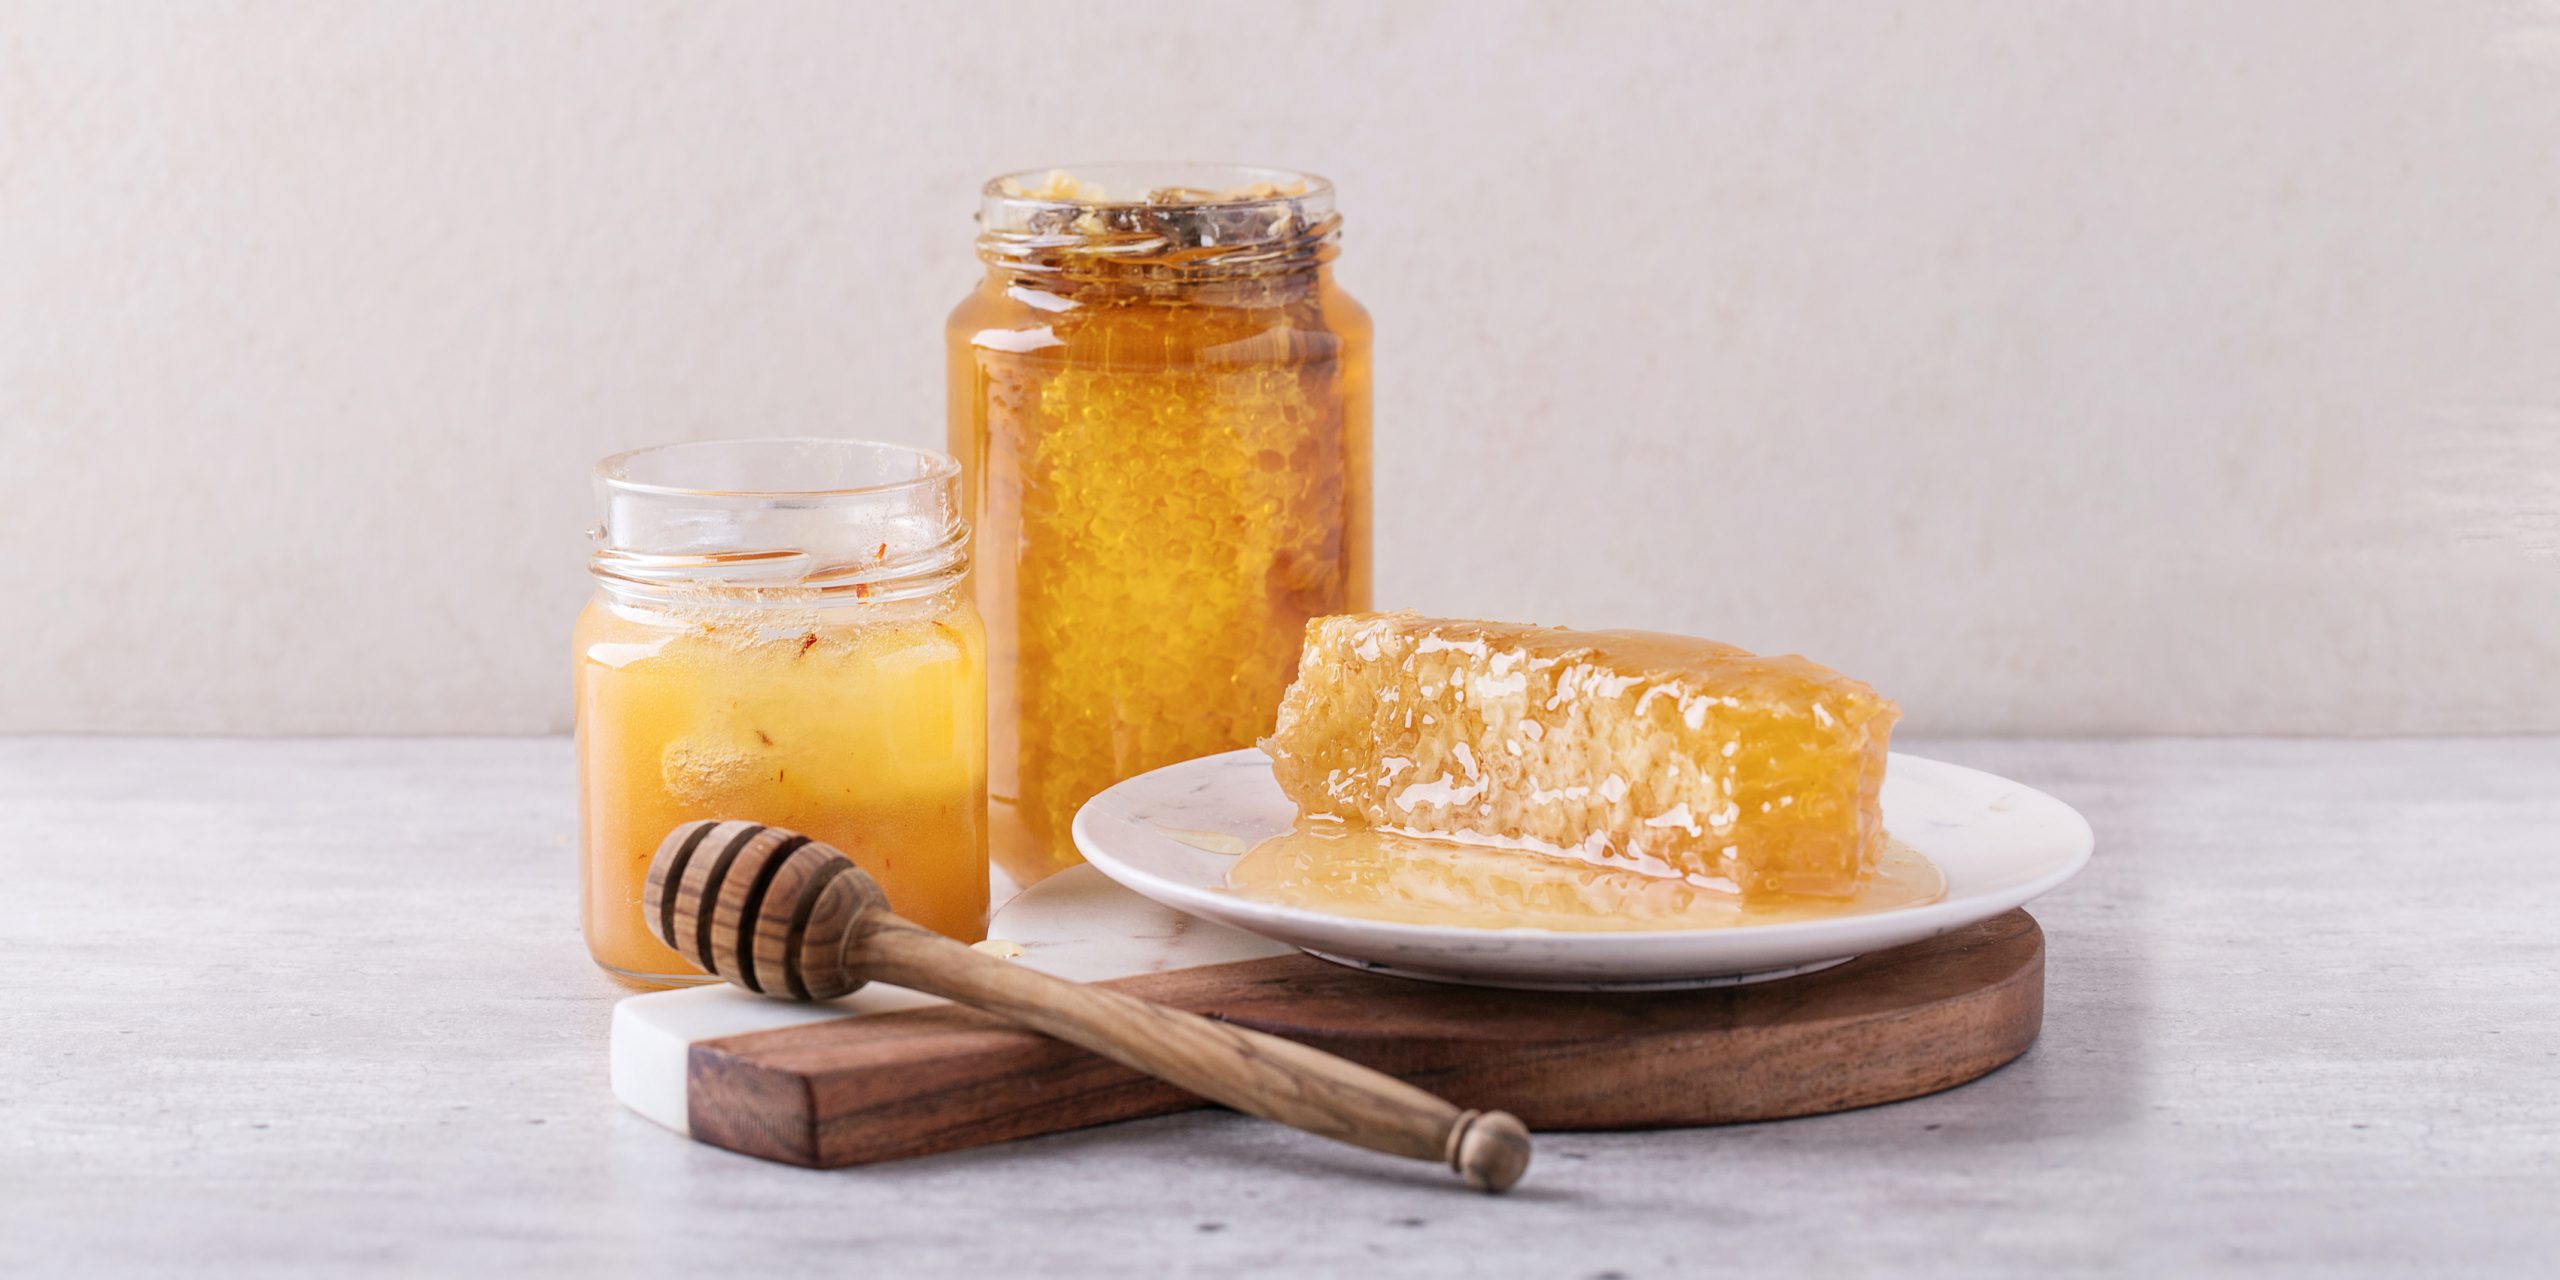 Is Honey Good for Diabetes?